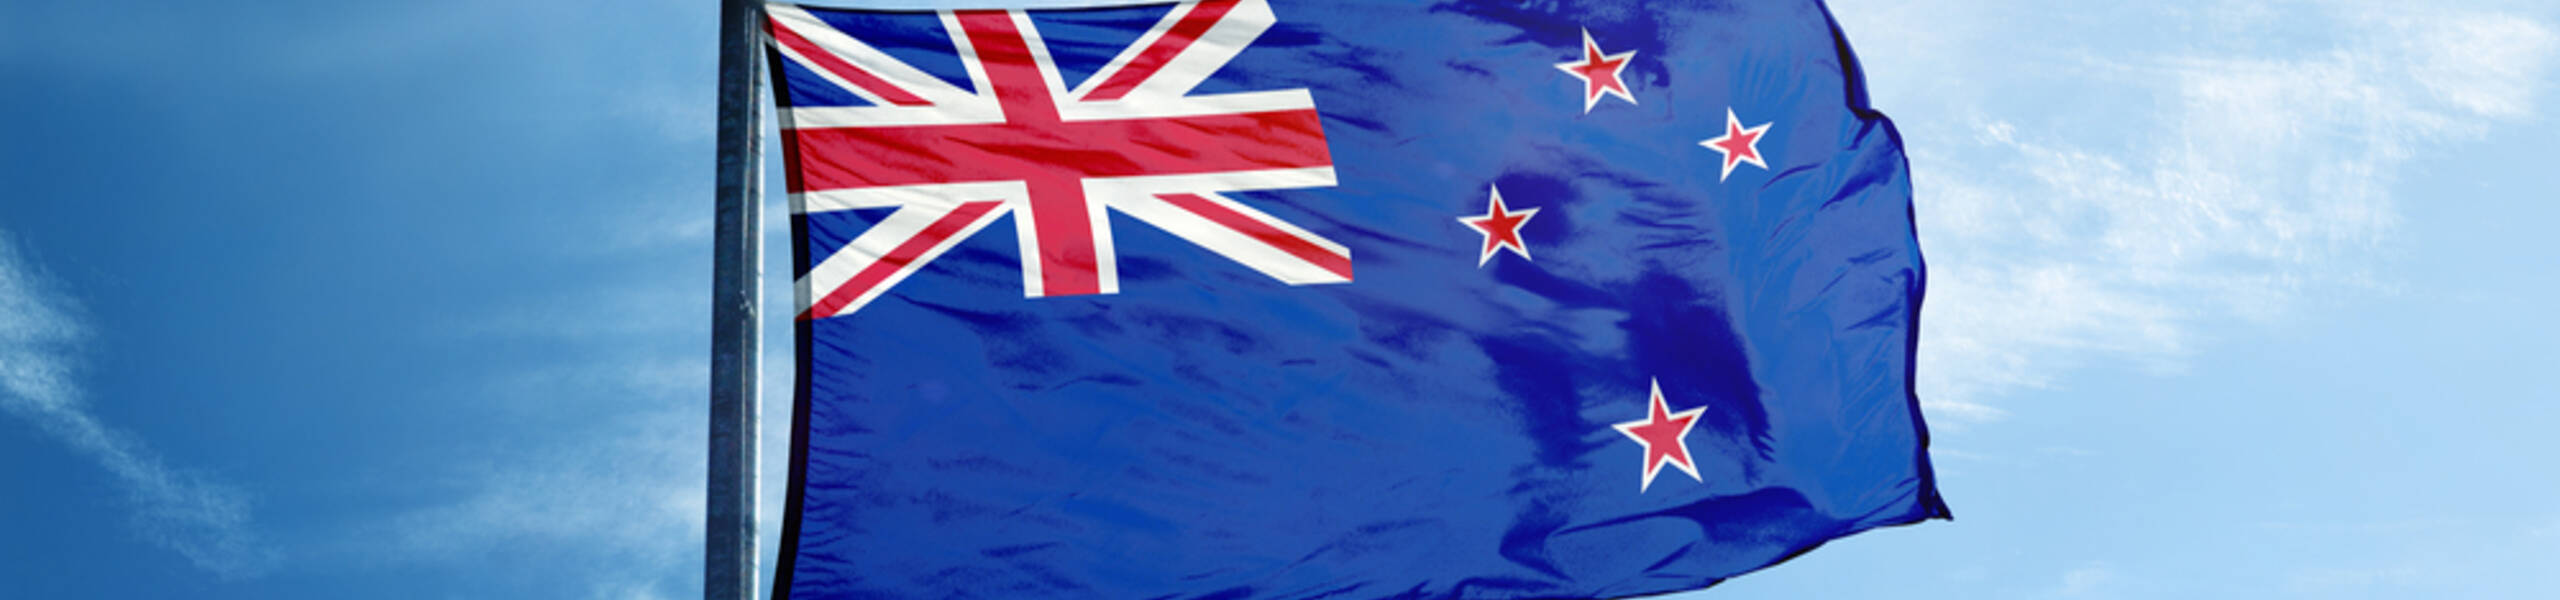 Official Cash Rate และ RBNZ Monetary Policy Statement ของธนาคารกลางนิวซีแลนด์ที่รุนแรงในวันนี้